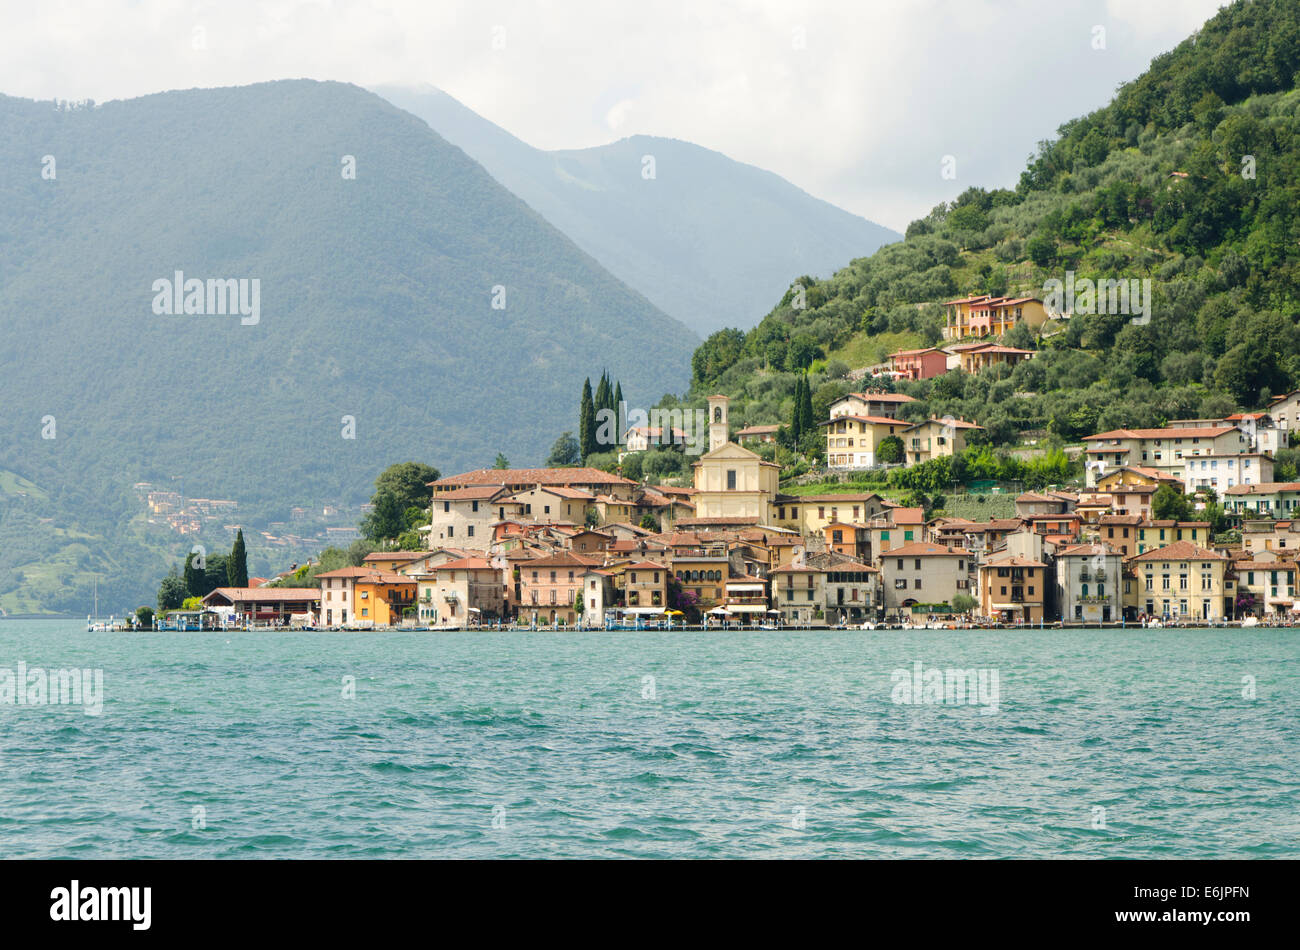 Iseo-See Italien. Lago d'Iseo oder Sebino mit dem Dorf Peschiera Maraglio dahinter. Lombardei. Norditalien. Stockfoto